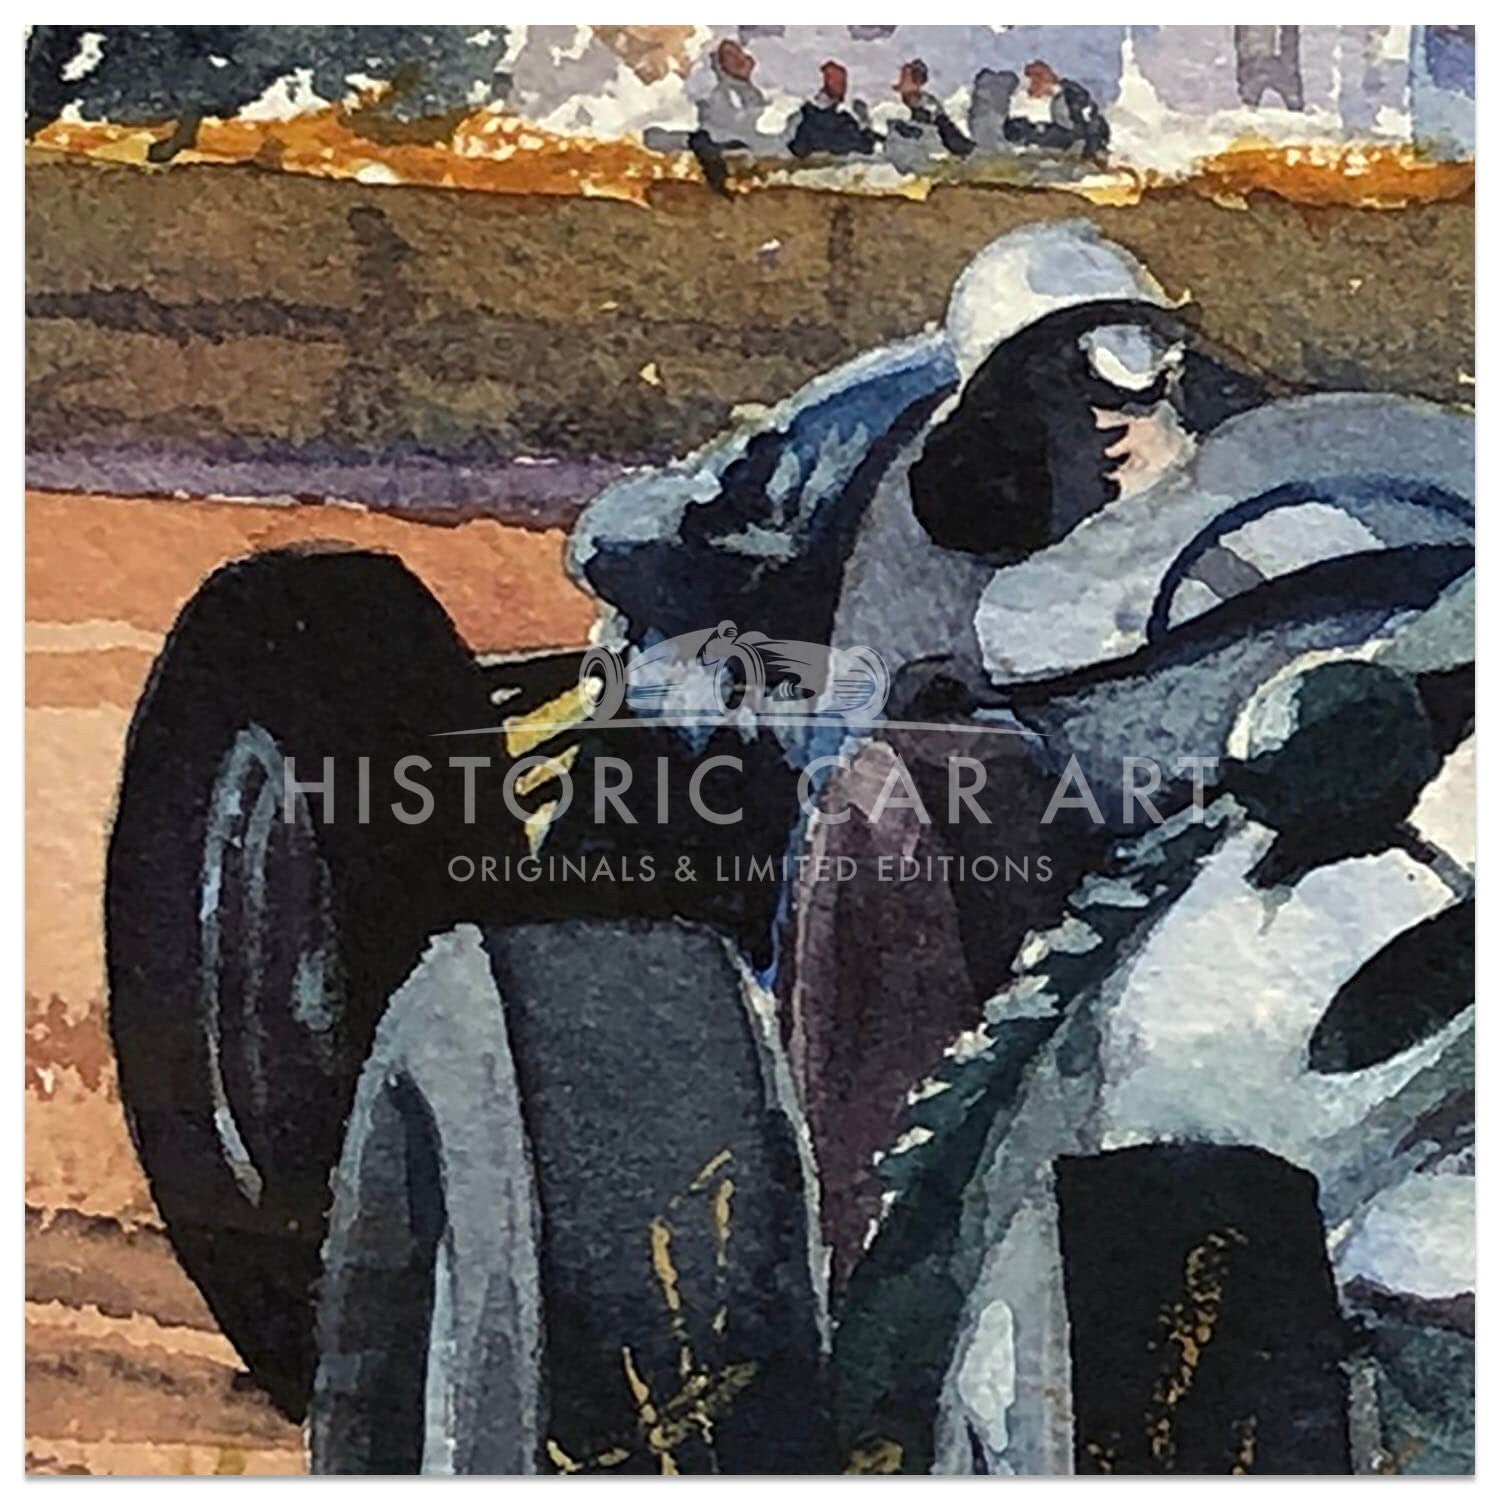 Safety Fast | 1959 Dutch Grand Prix | Jo Bonnier | BRM | Artwork